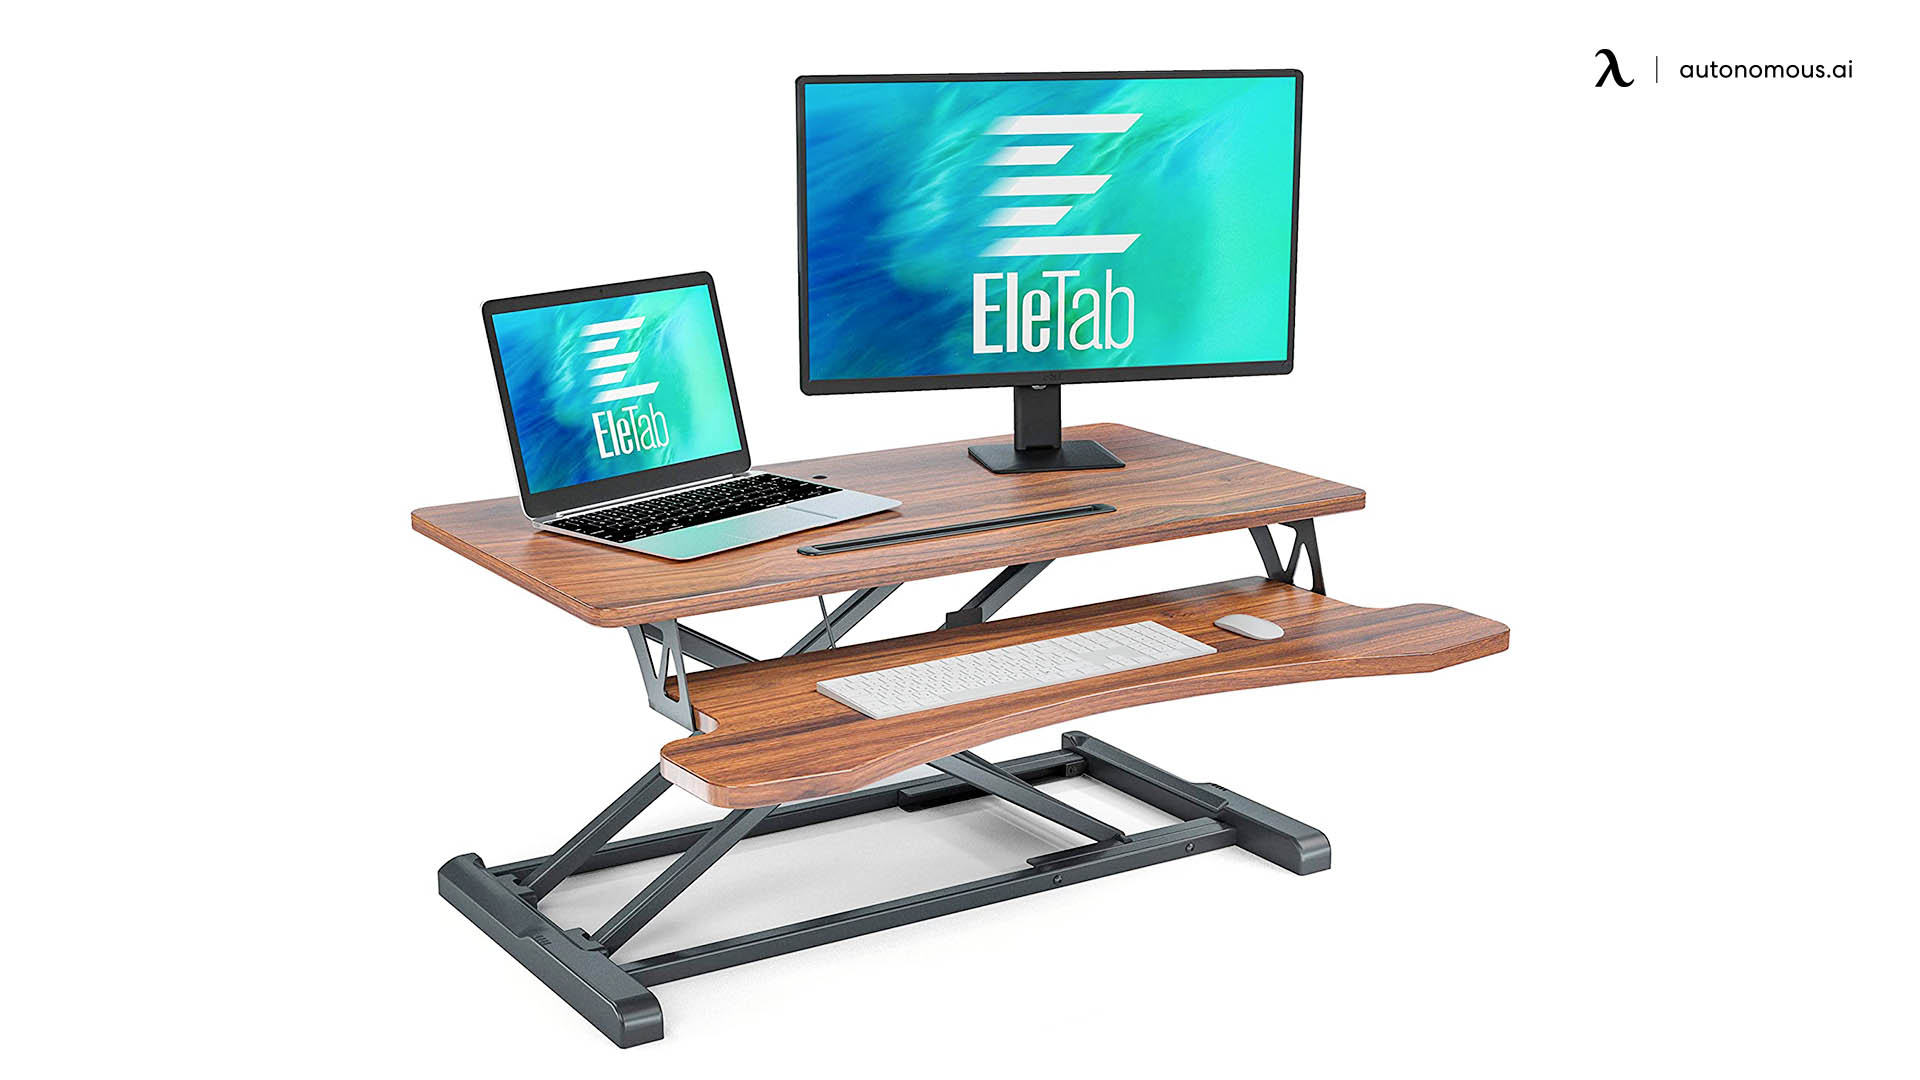 EleTab Desk Converter